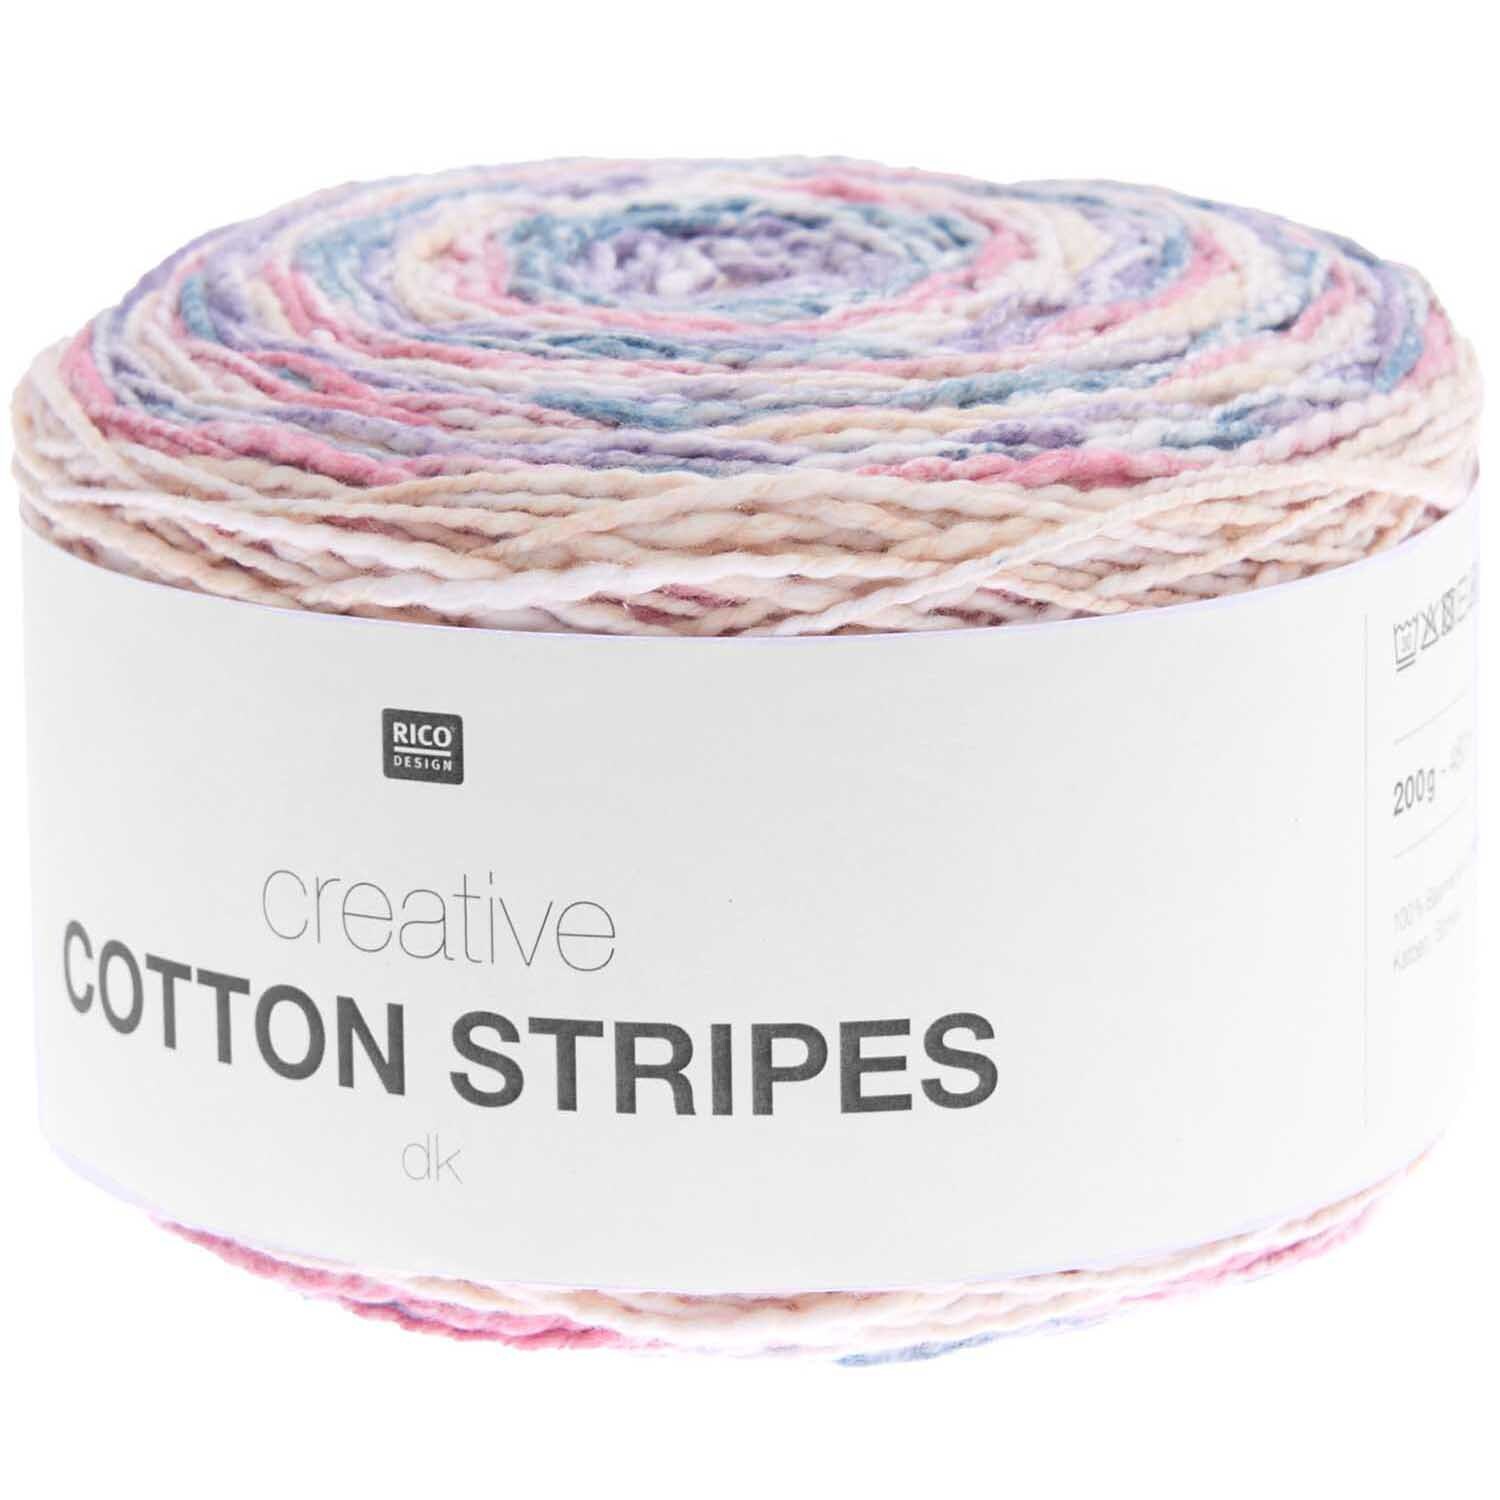 Creative Cotton Stripes dk